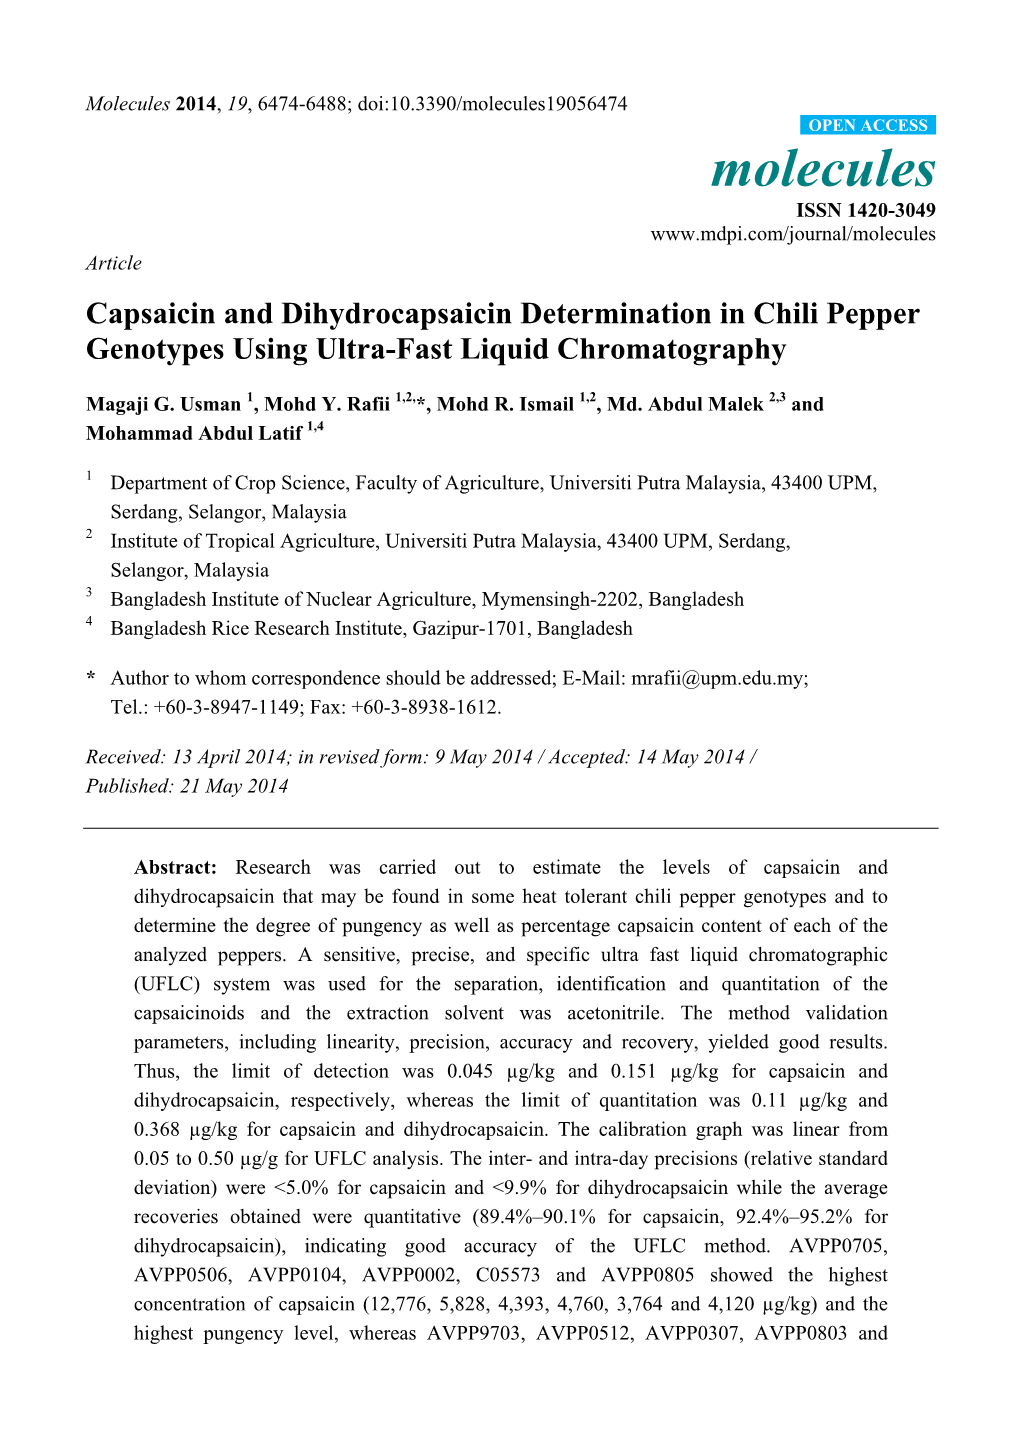 Capsaicin and Dihydrocapsaicin Determination in Chili Pepper Genotypes Using Ultra-Fast Liquid Chromatography